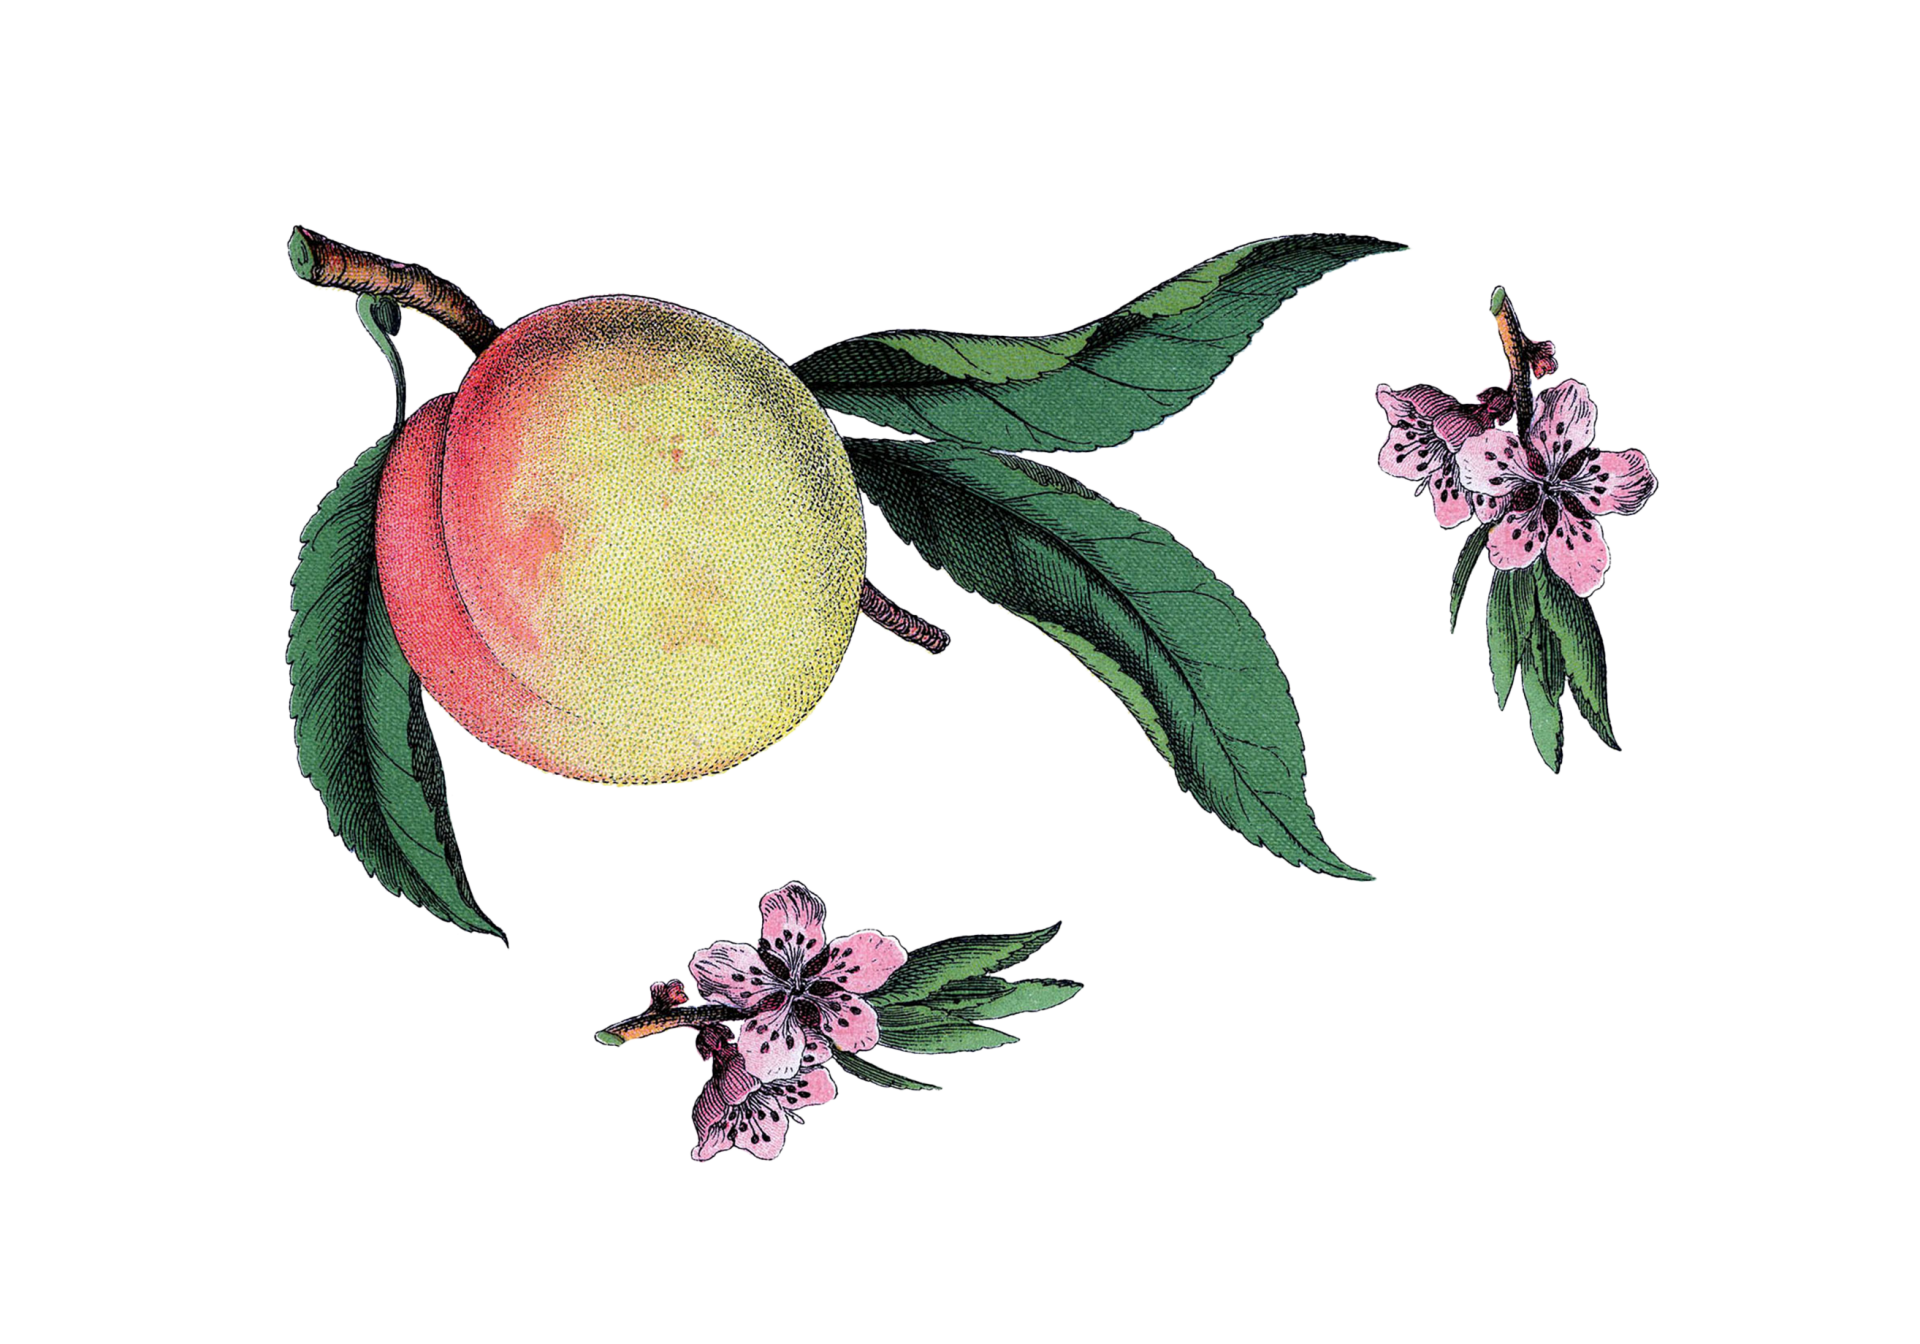 Peach Fruit Vintage Art